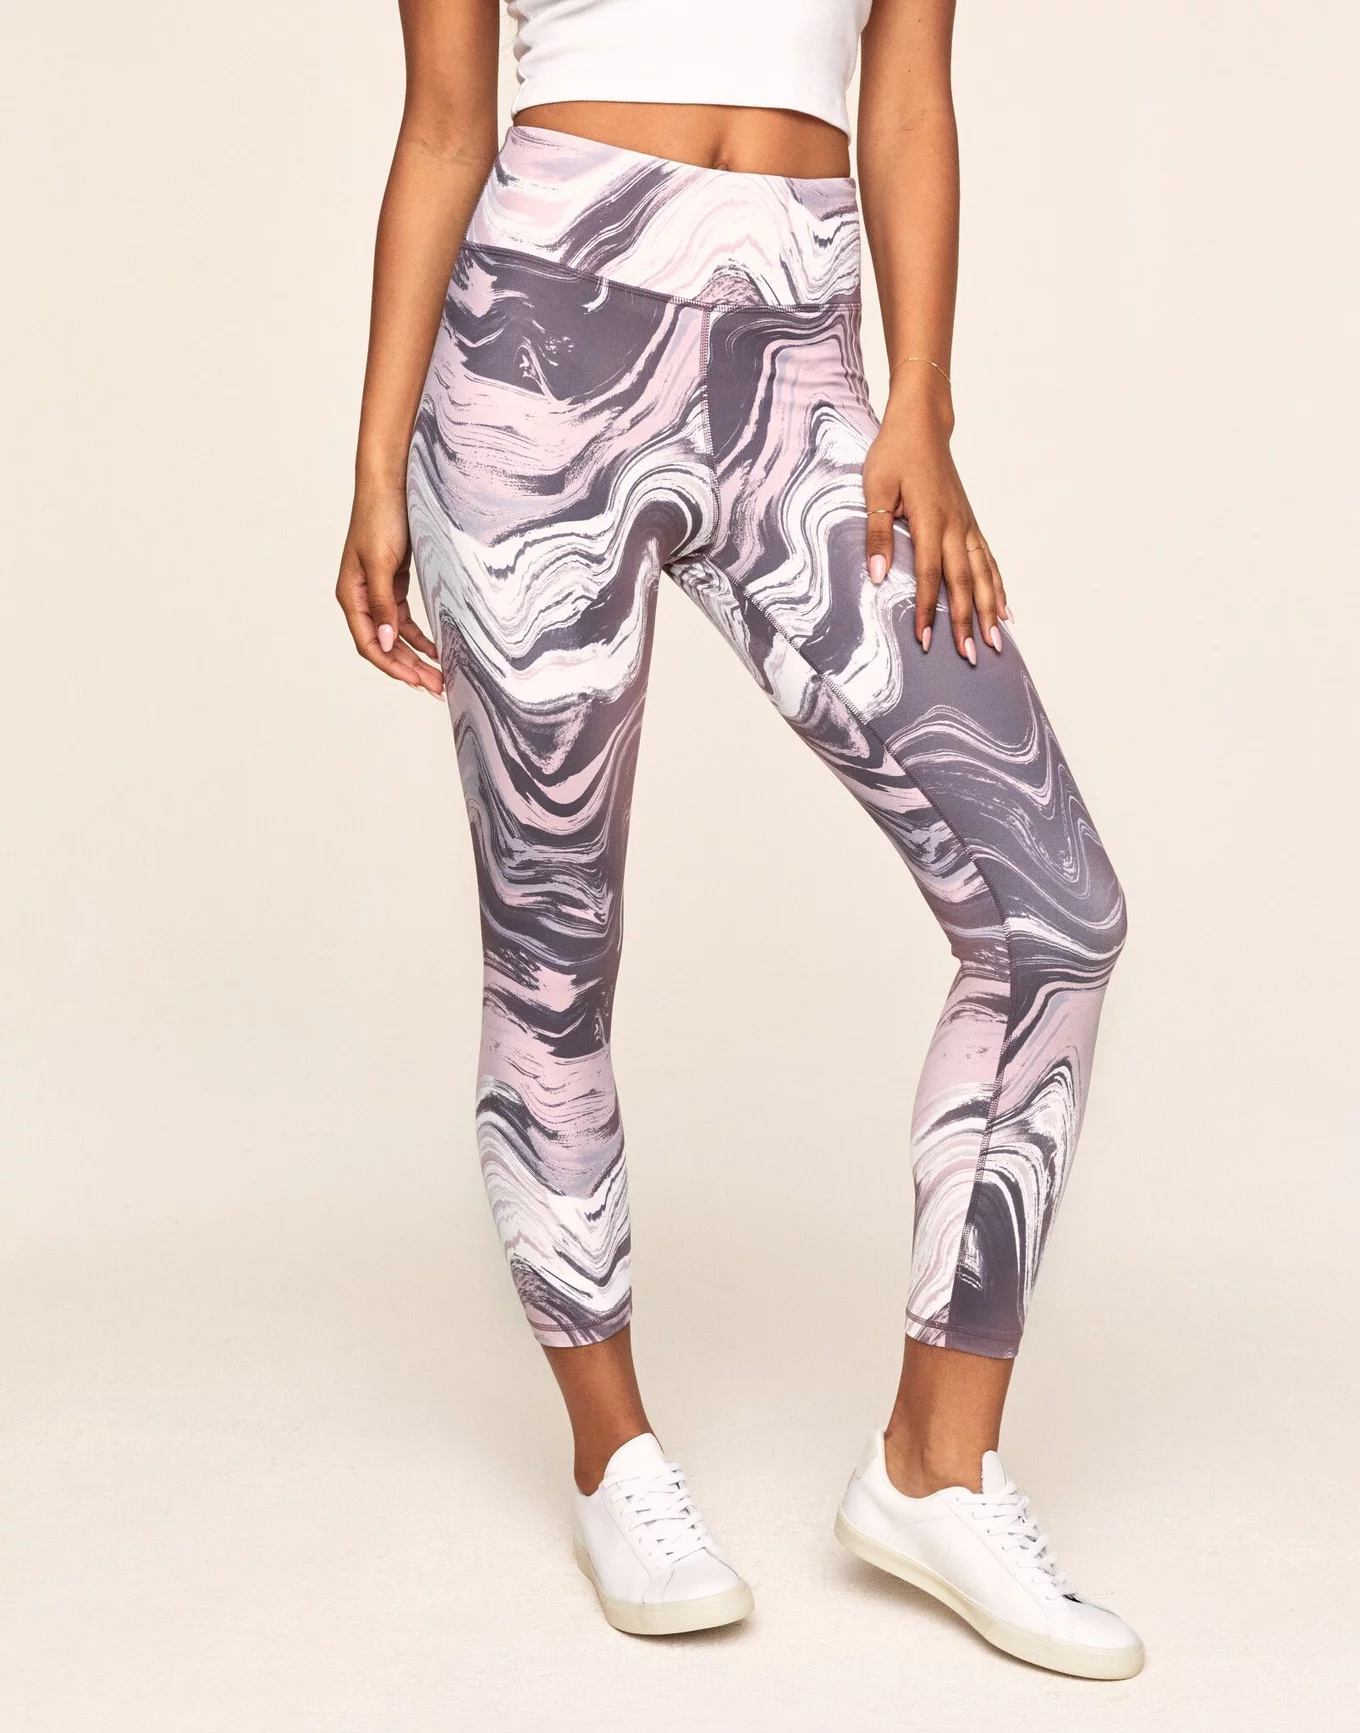 Women XS Lorna Jane Green Command Core Tights Camo Print Yoga Pants 7/8  Length